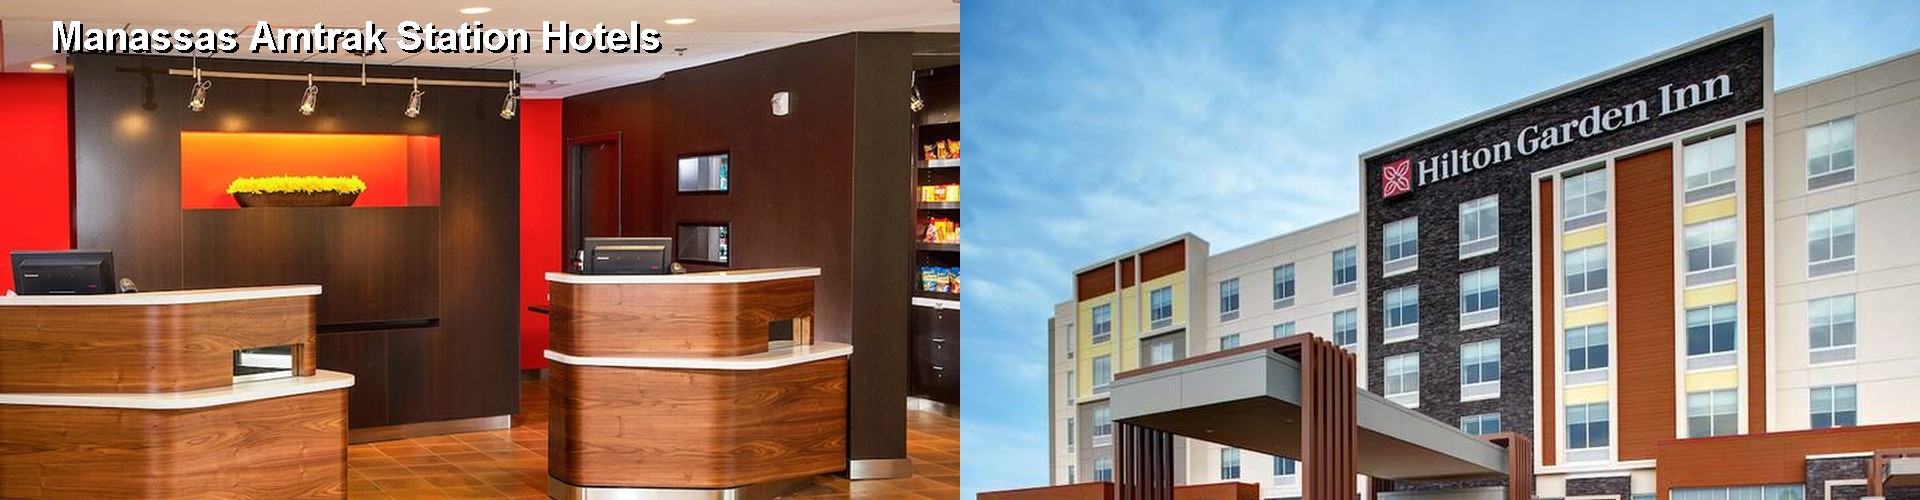 4 Best Hotels near Manassas Amtrak Station